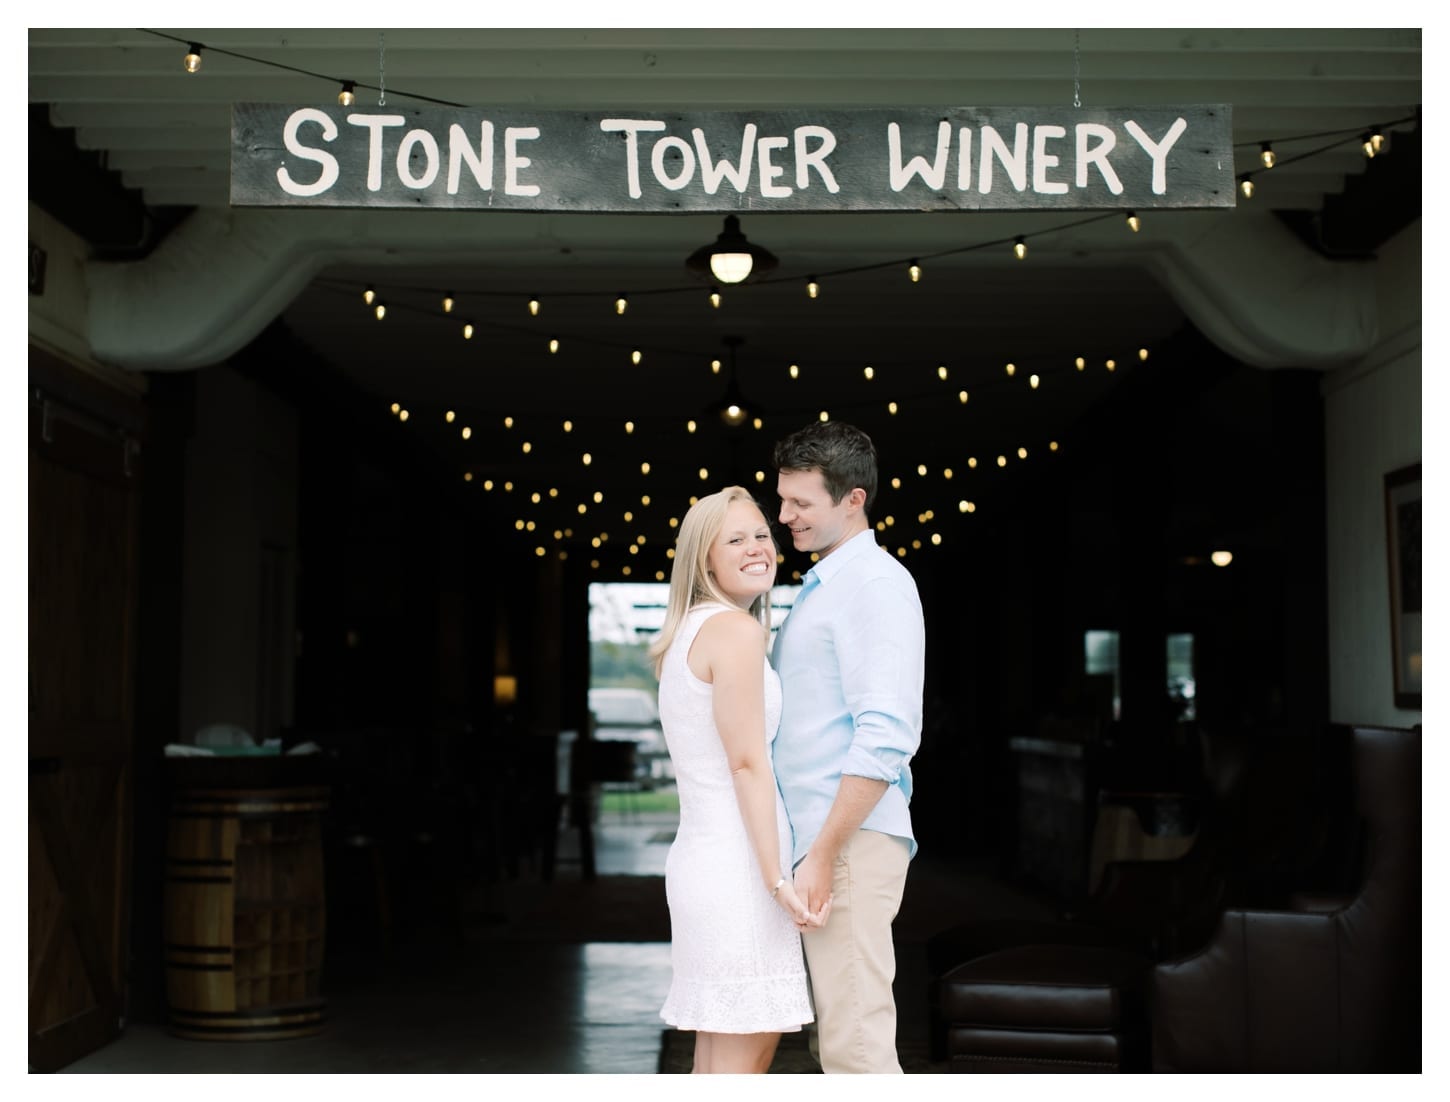 Stone Tower Winery engagement photographer